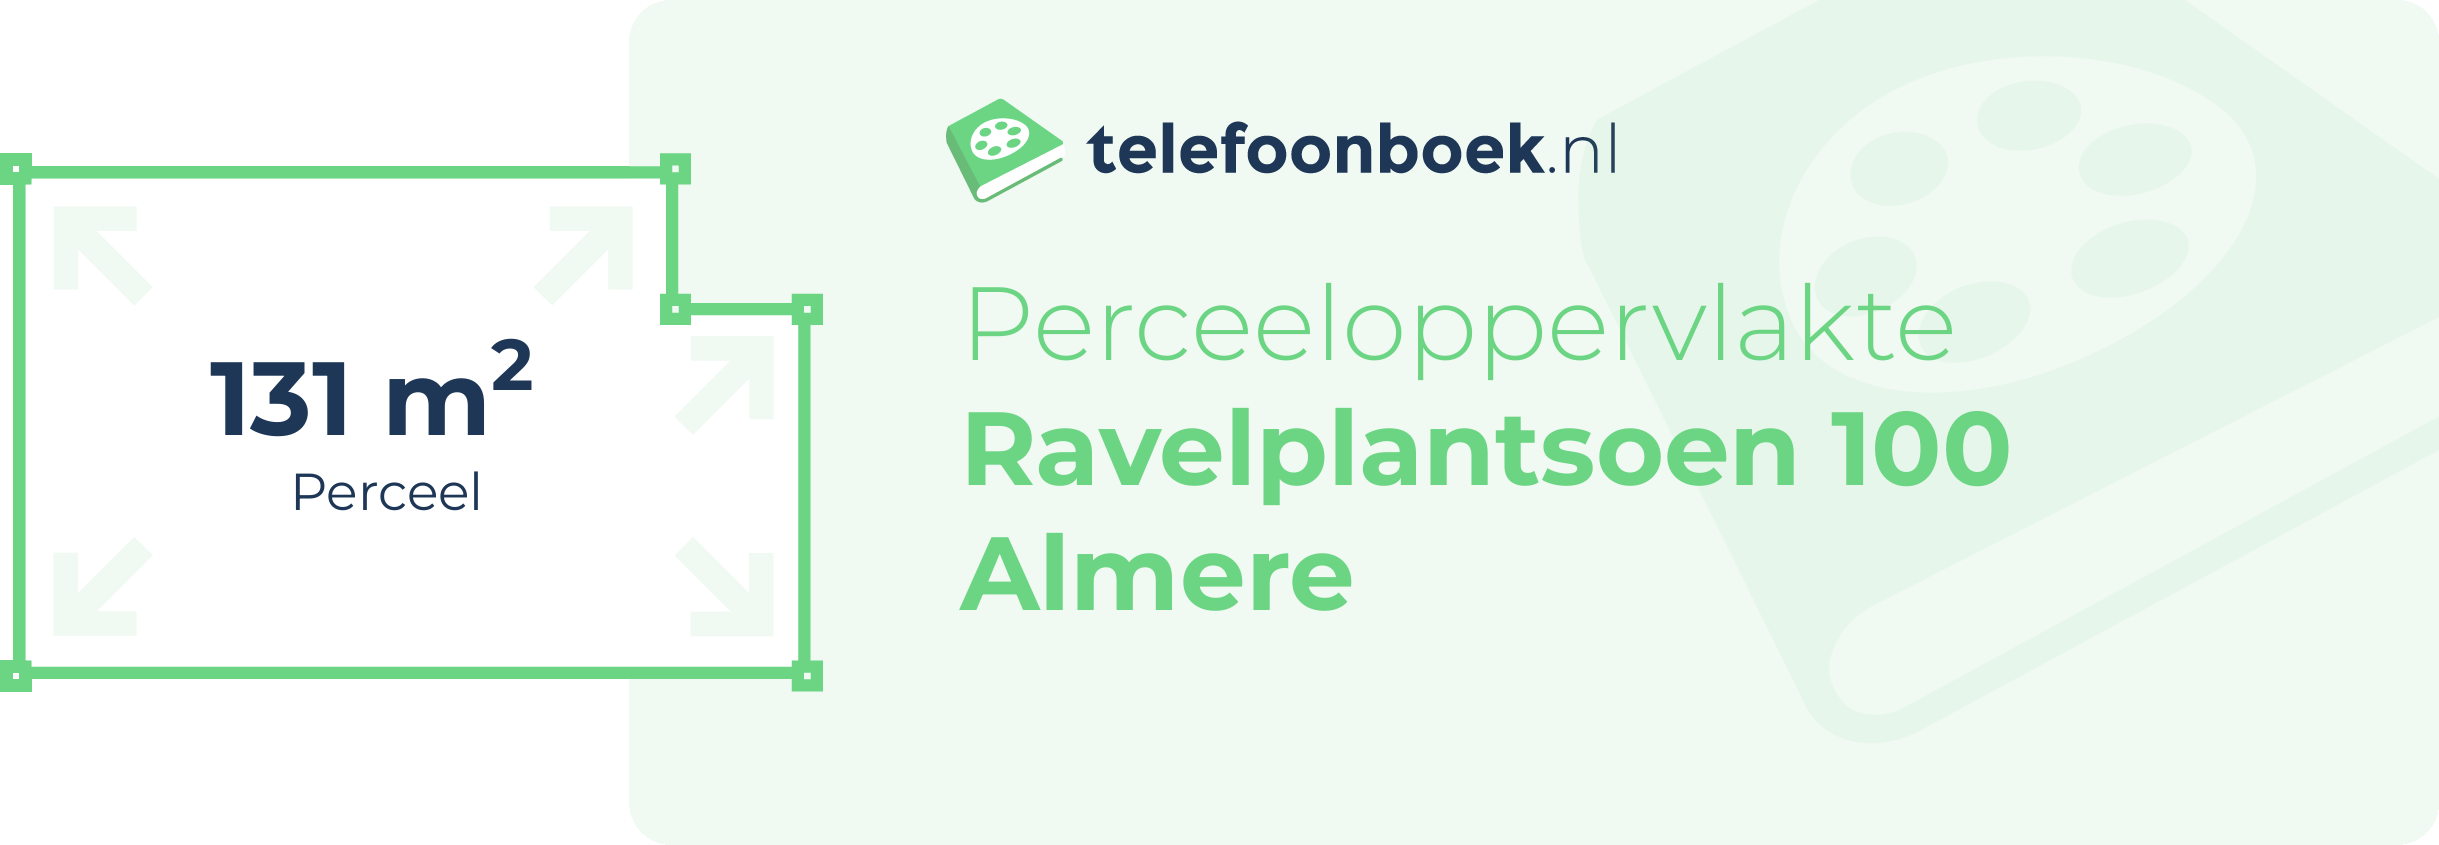 Perceeloppervlakte Ravelplantsoen 100 Almere